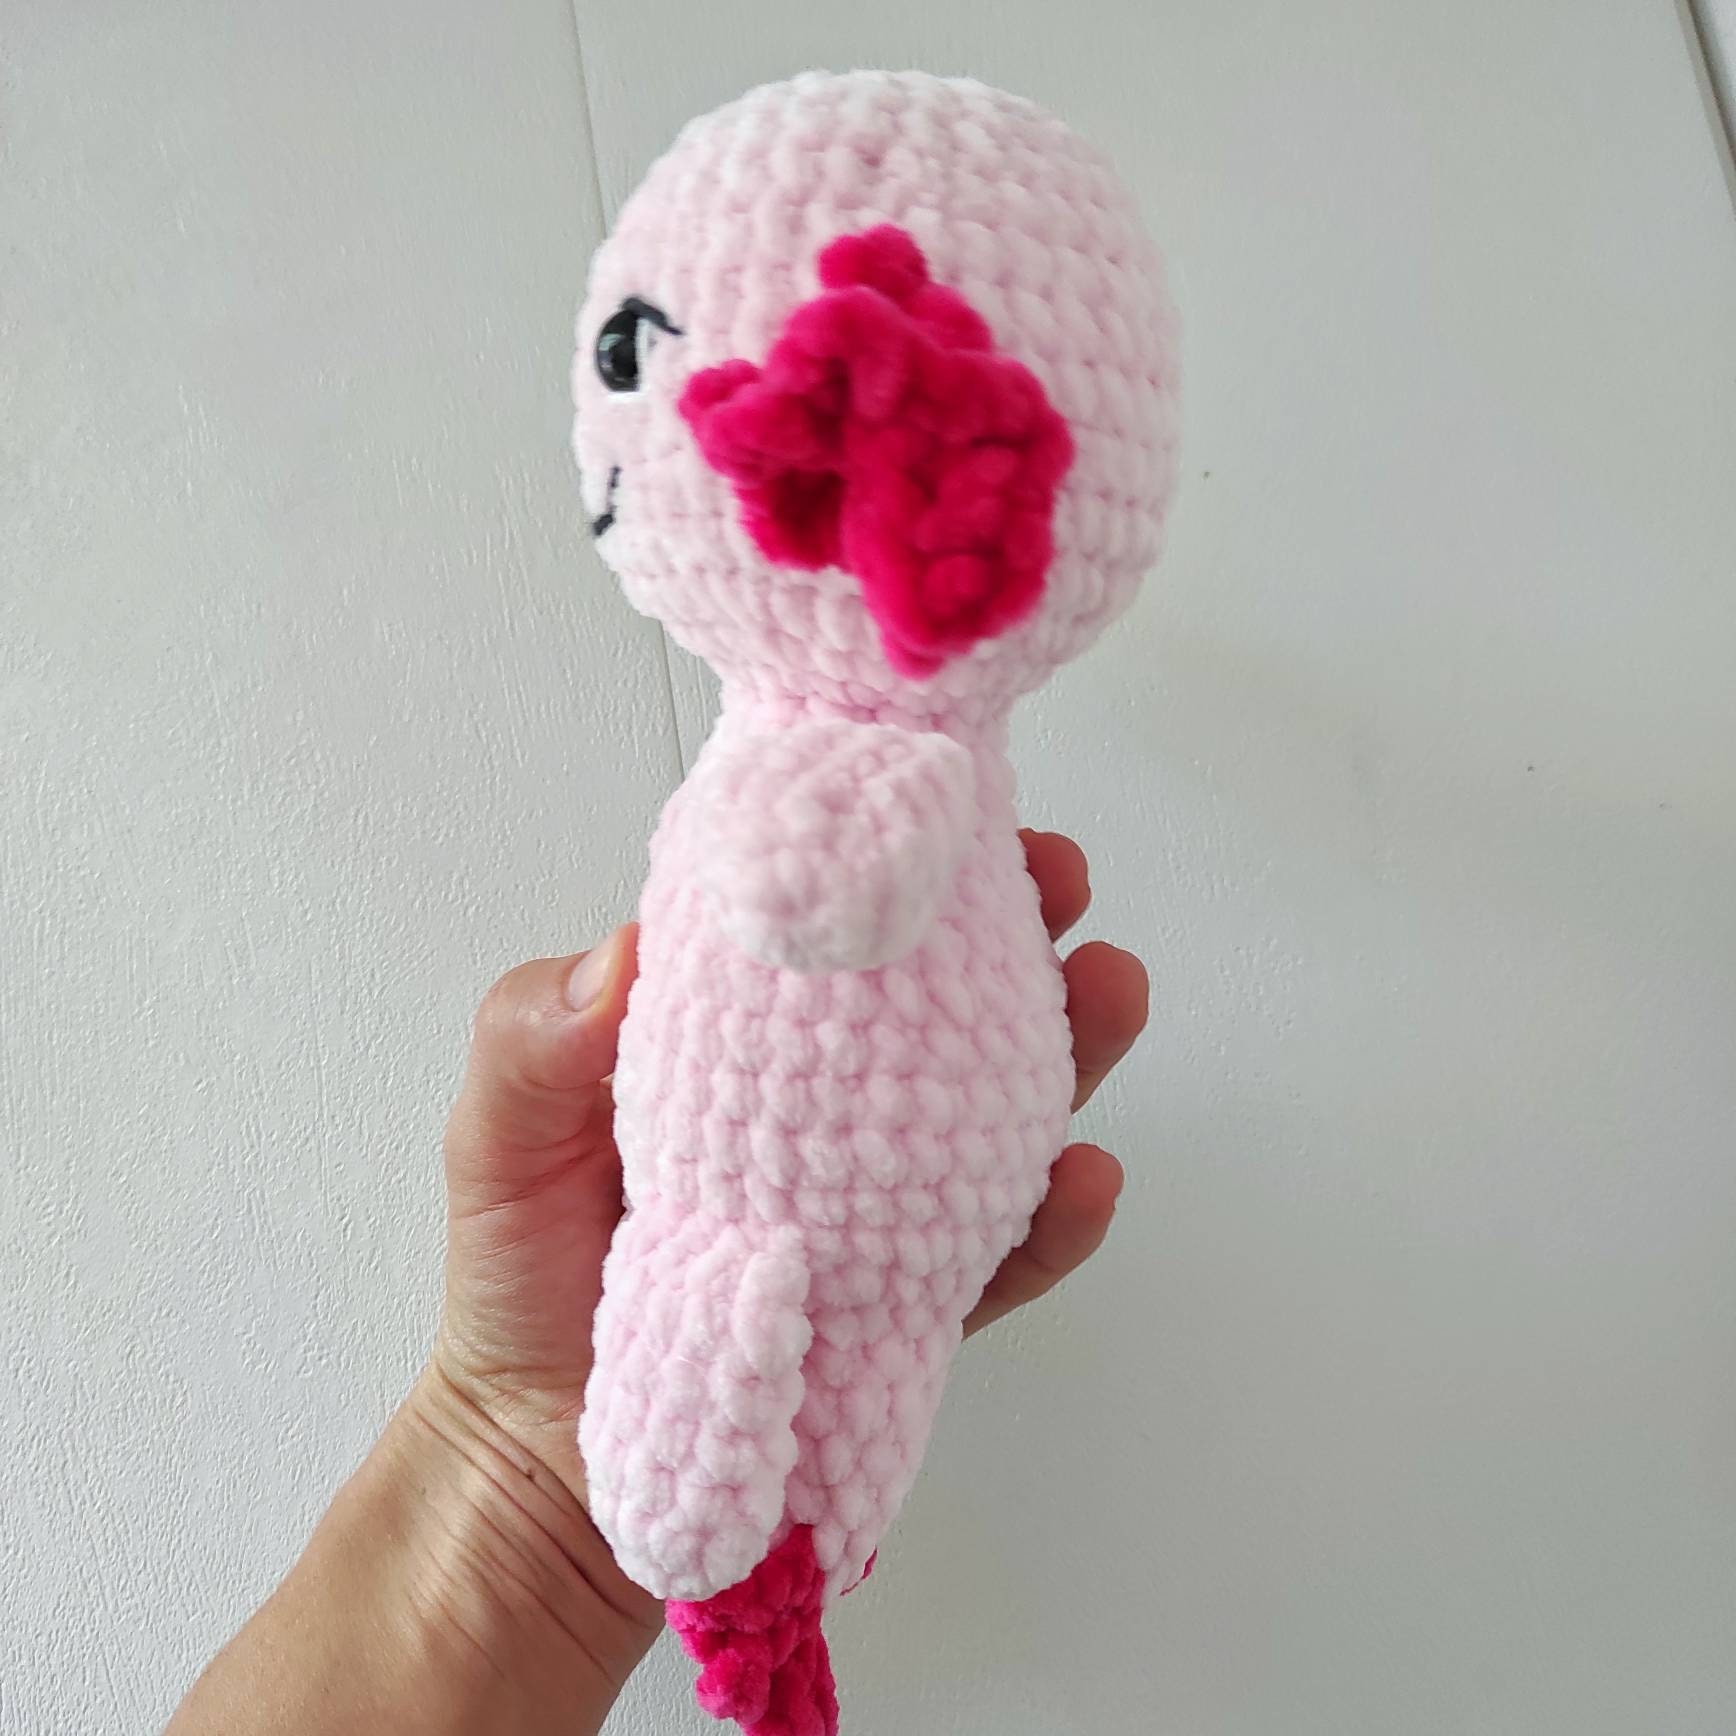 Buy CROCHET KIT Axolotl Beginners Amigurumi Kit With Yarn DIY